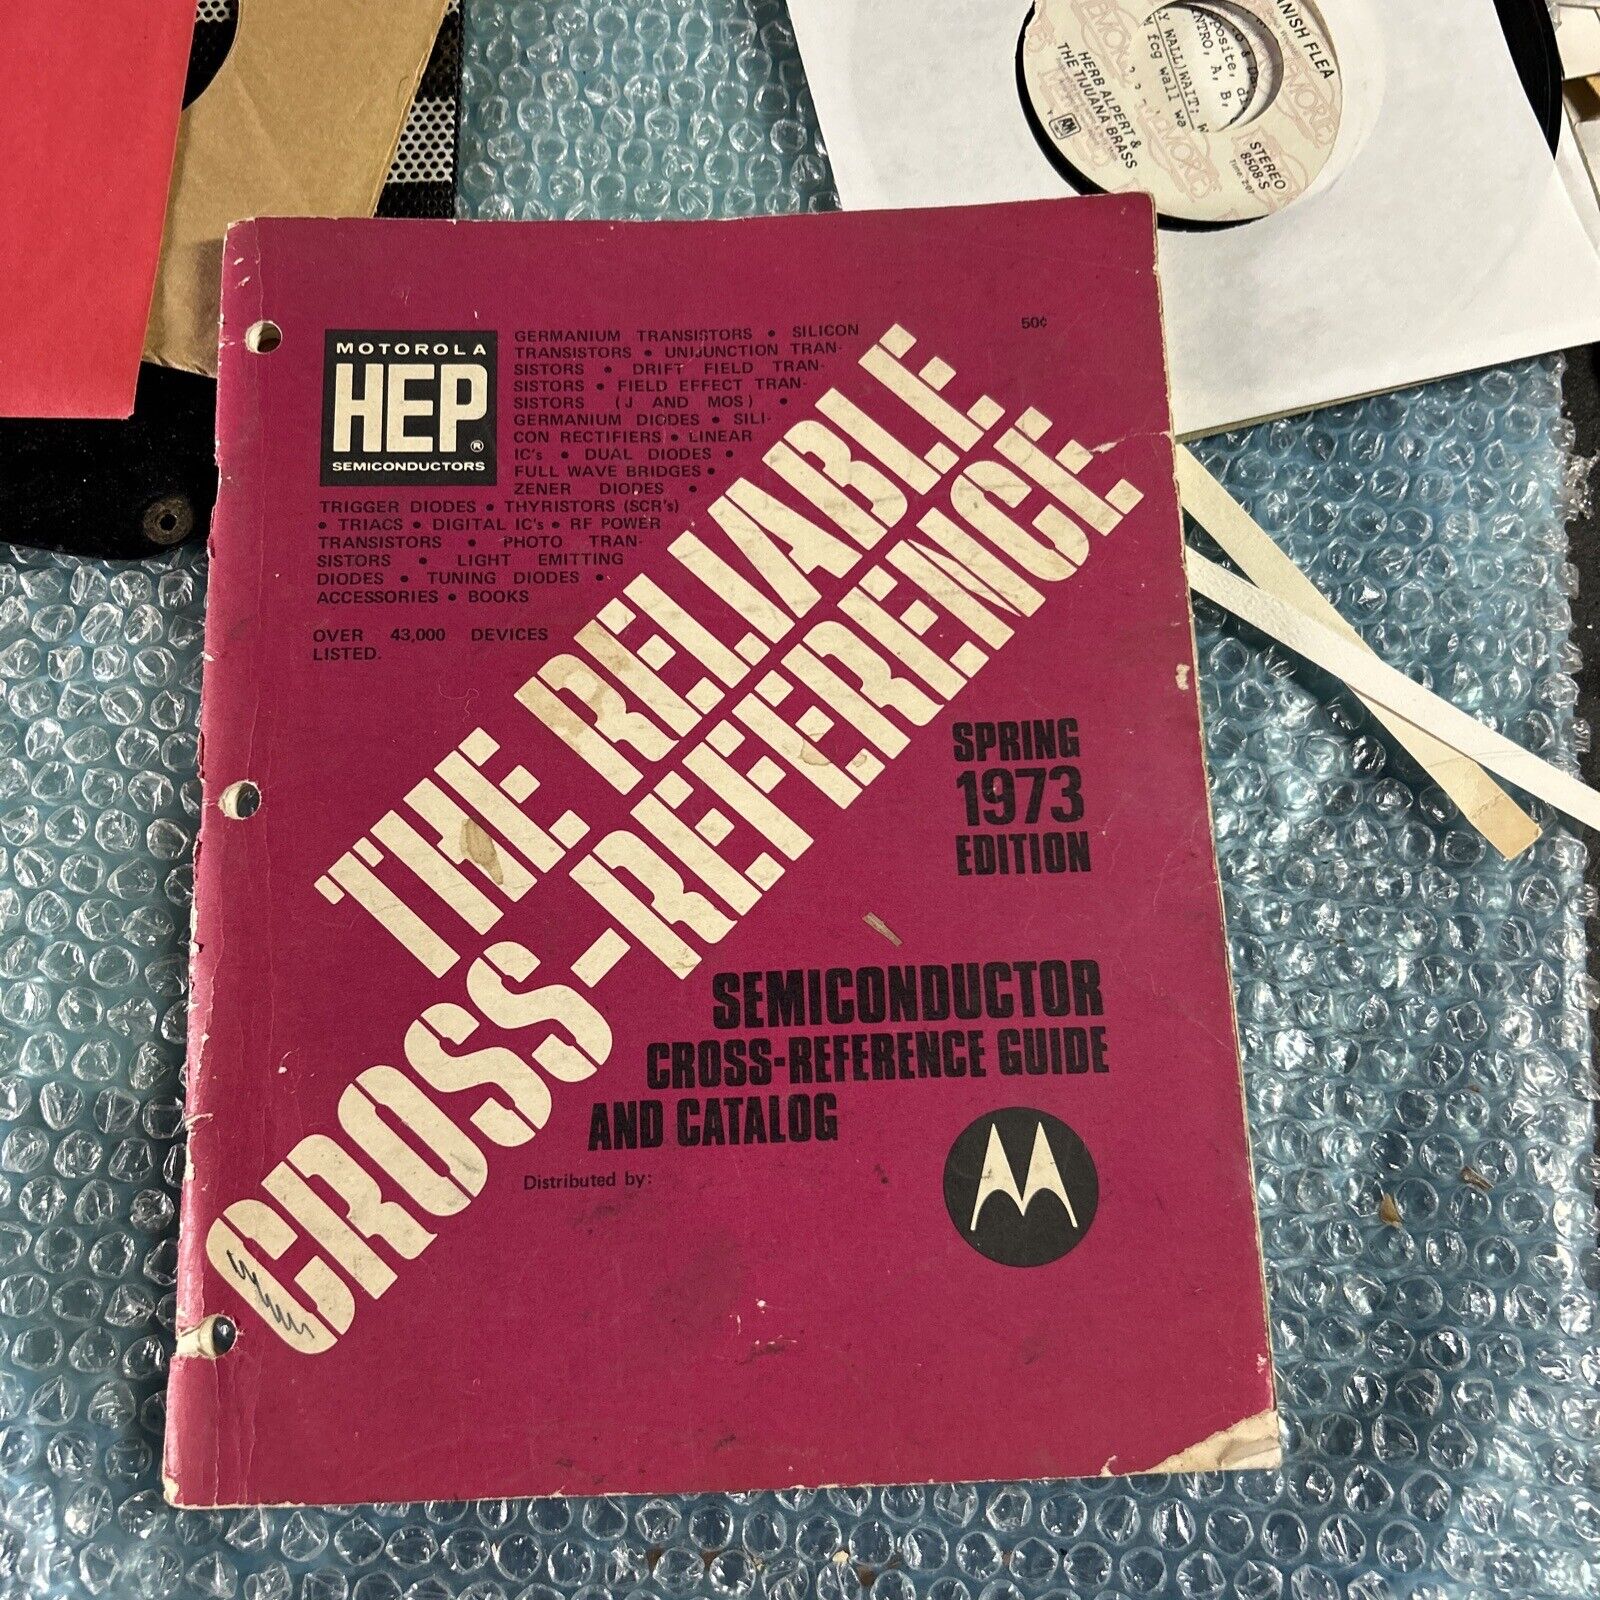 Motorola Cross Reference Semiconductor 1973 Hep Catalogue Guide